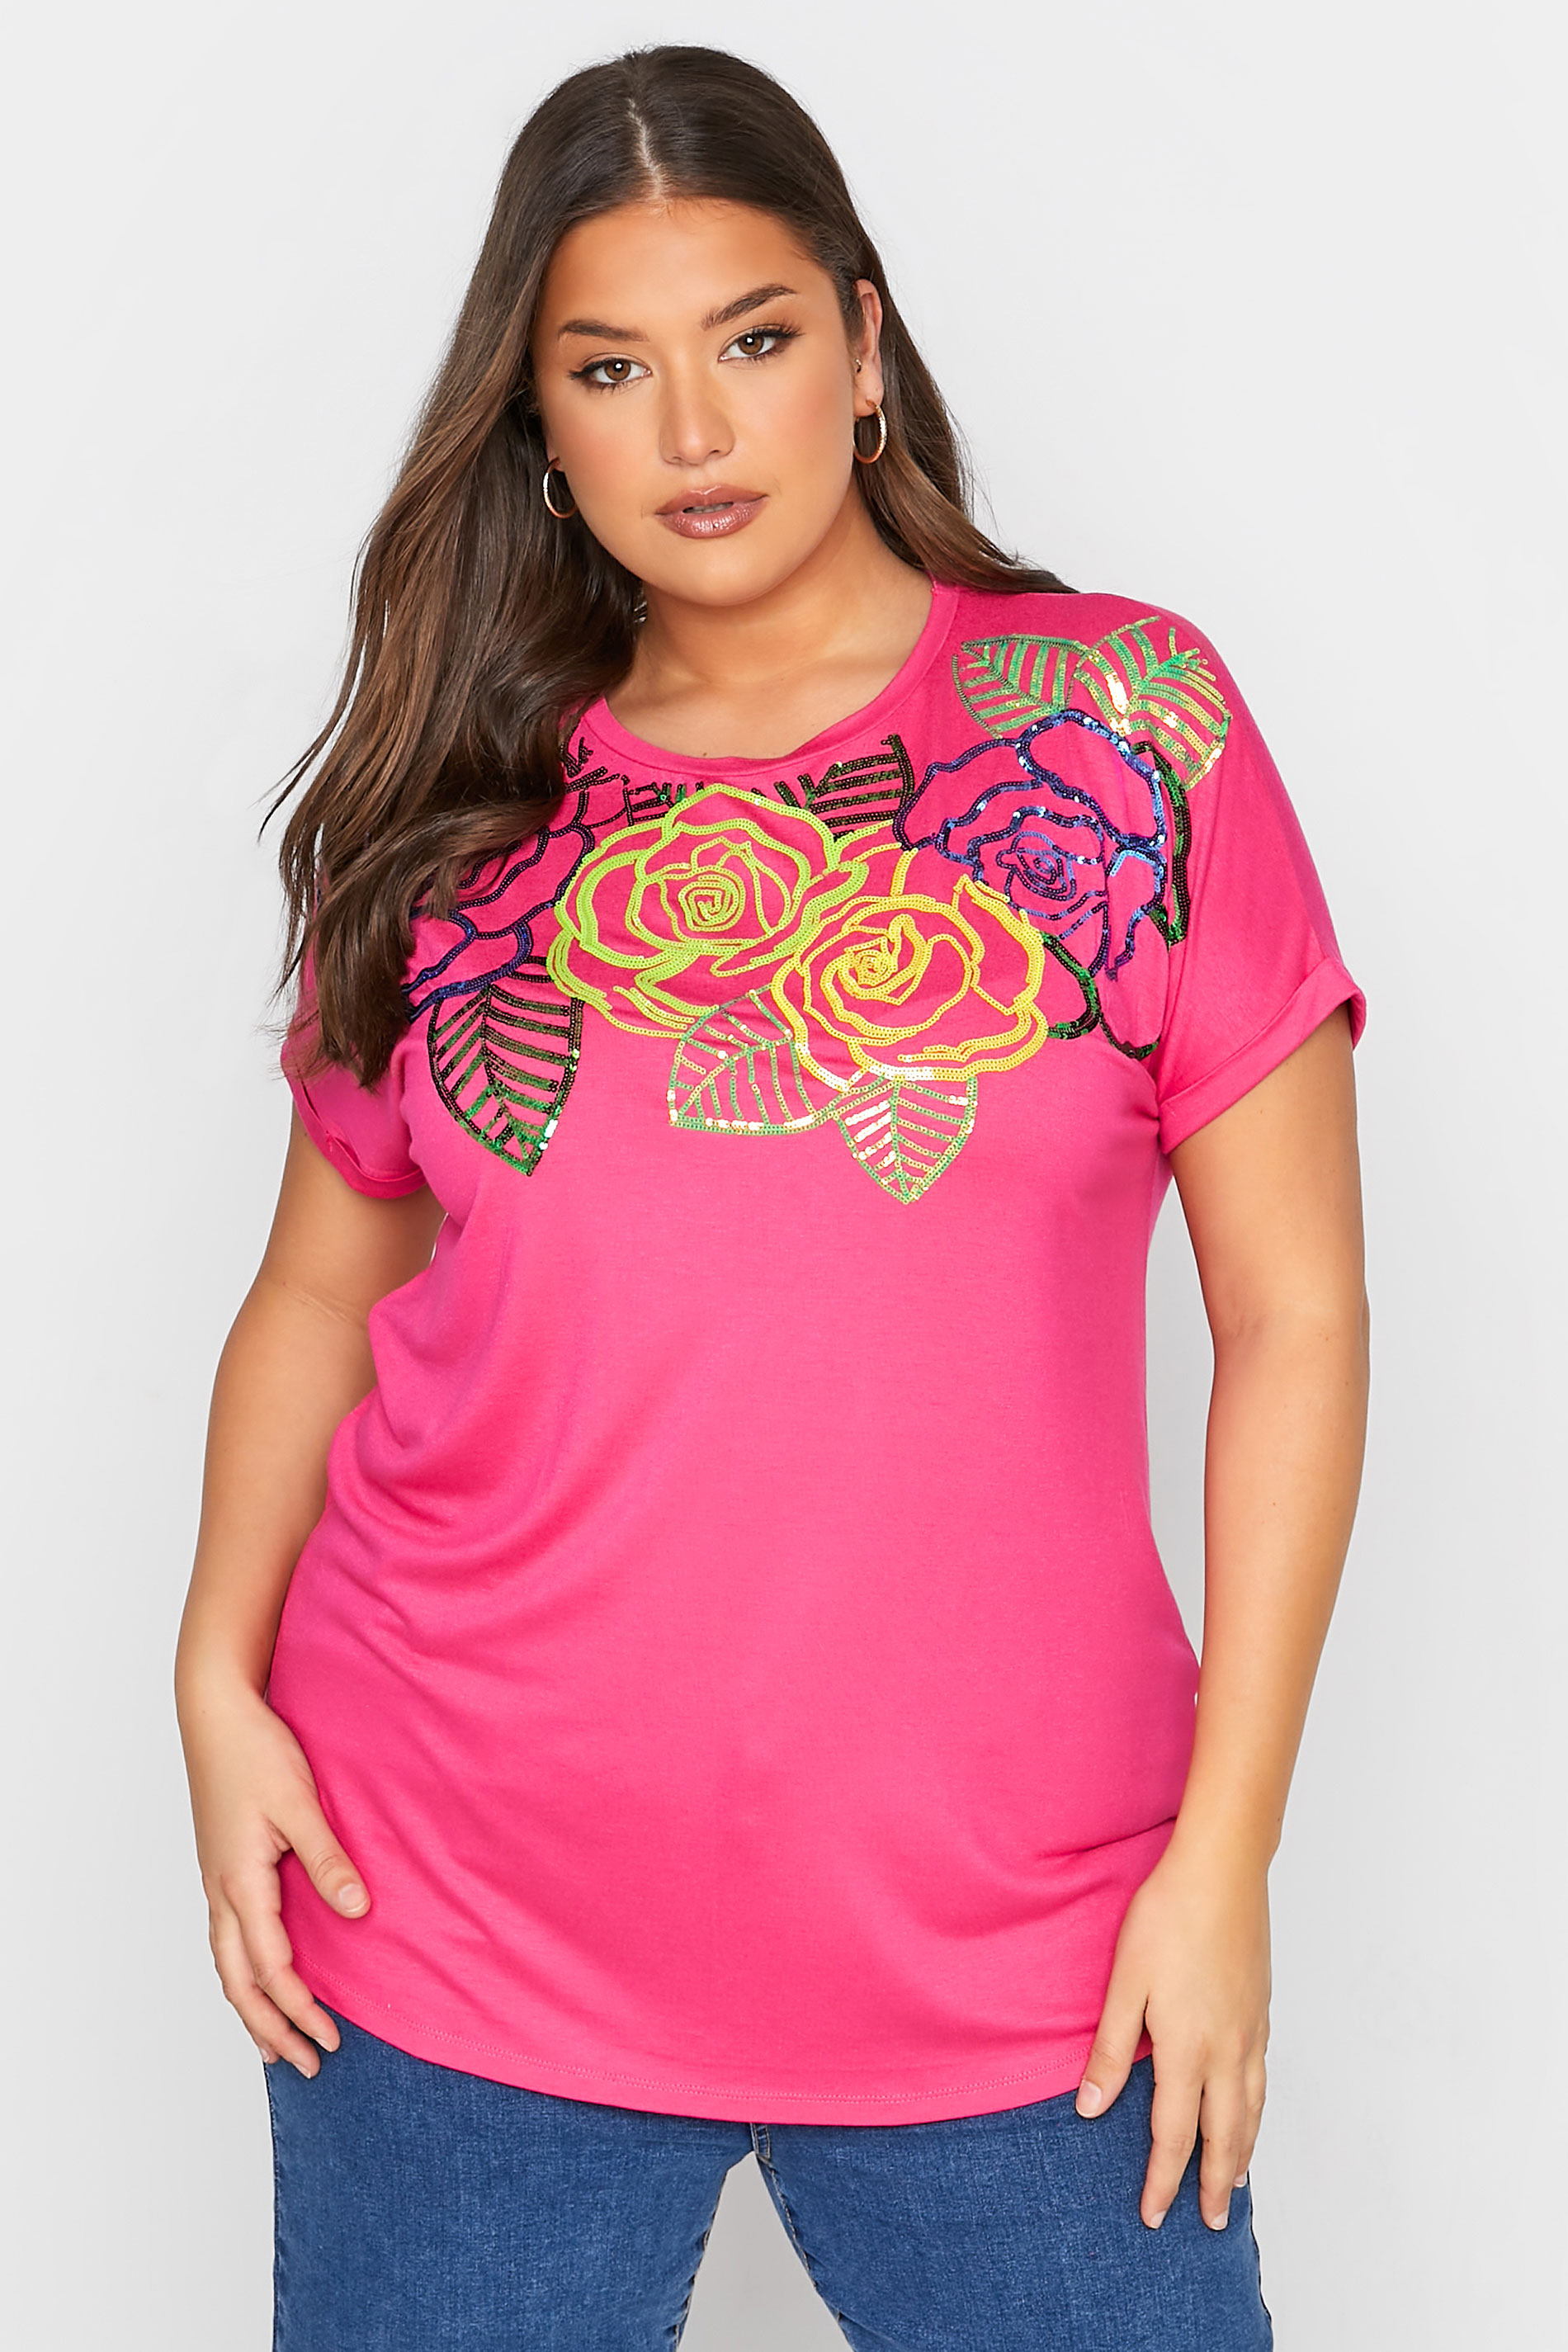 Grande taille  Tops Grande taille  Tops Jersey | T-Shirt Rose Empiècement Floral Sequins - JJ32421